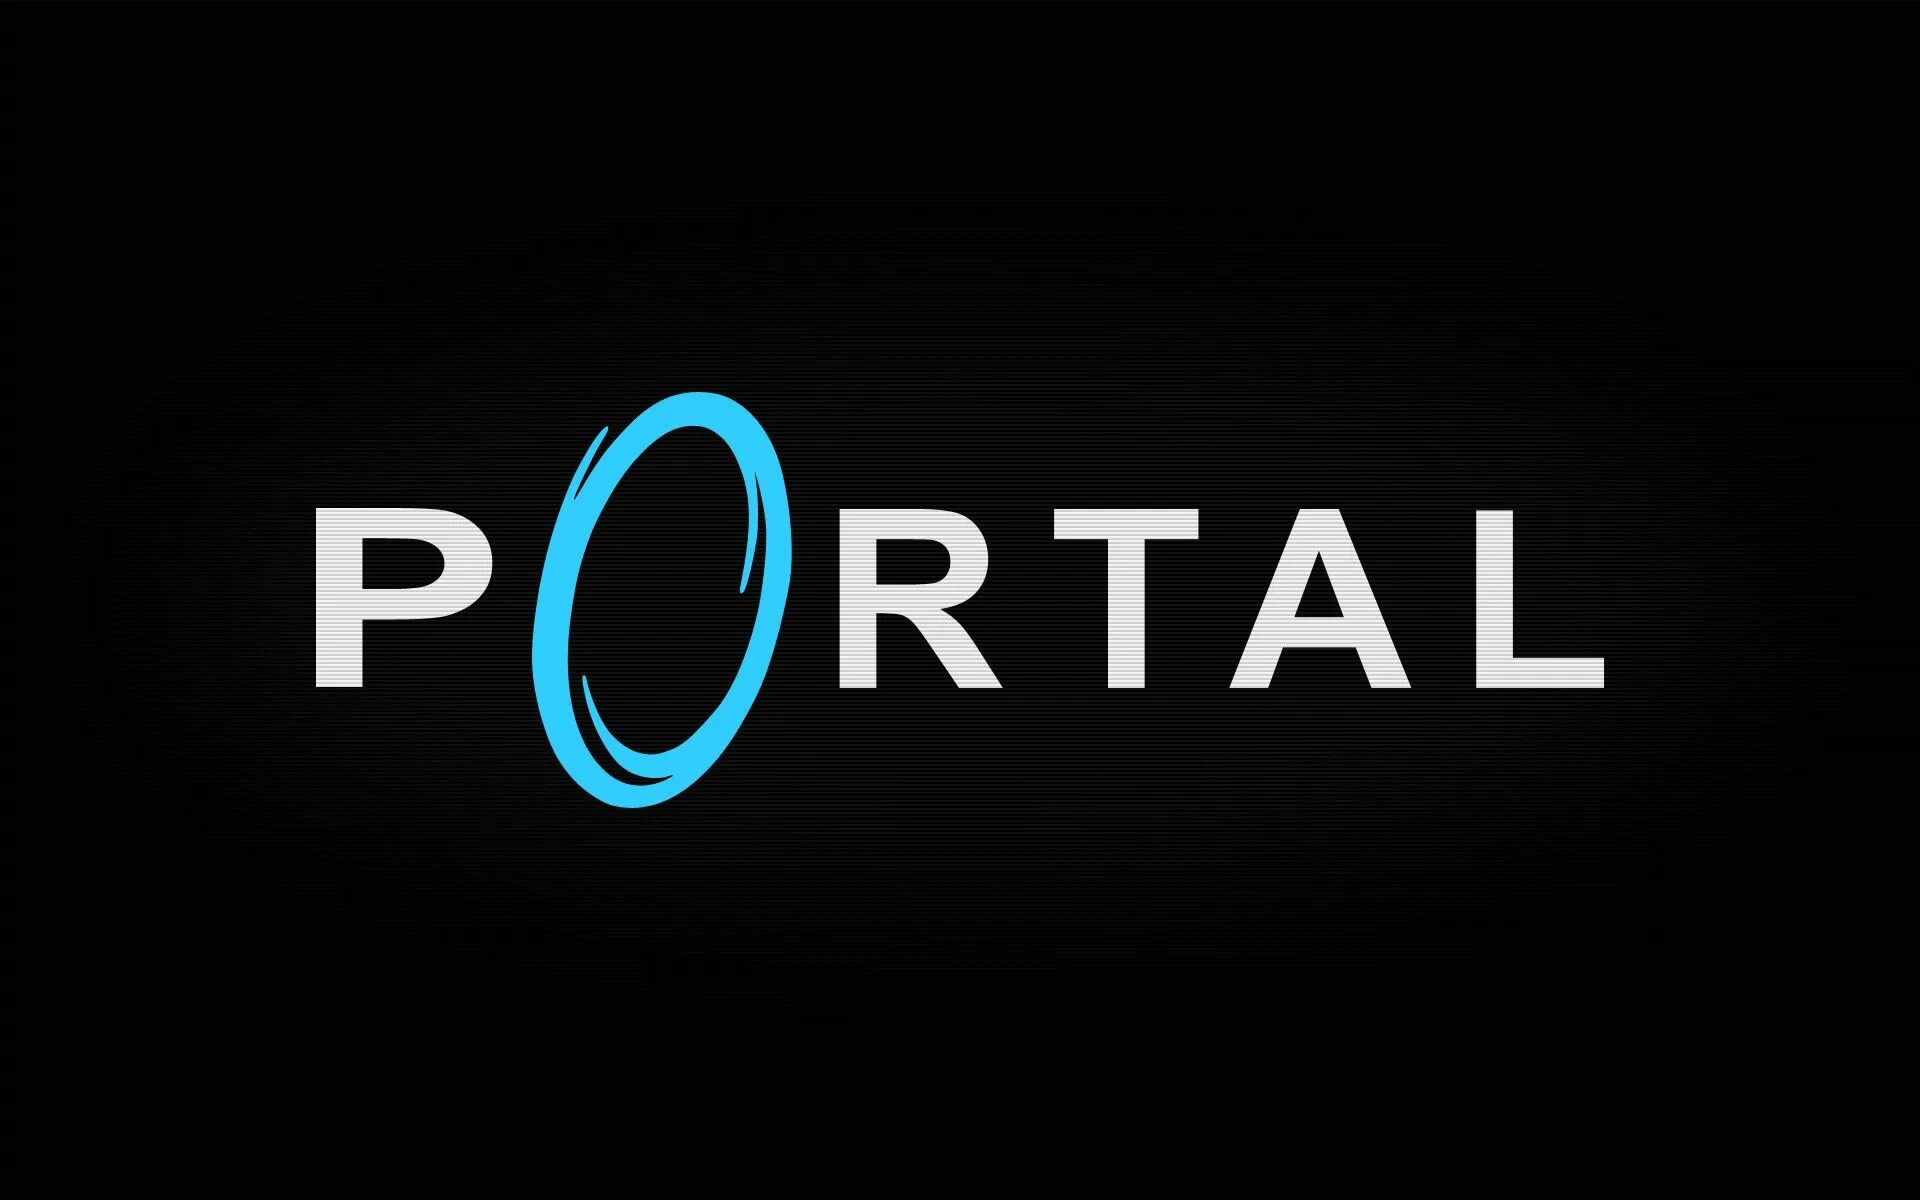 Портал логотип. Портал игра логотип. Портал 2 логотип. Портал. Например портал